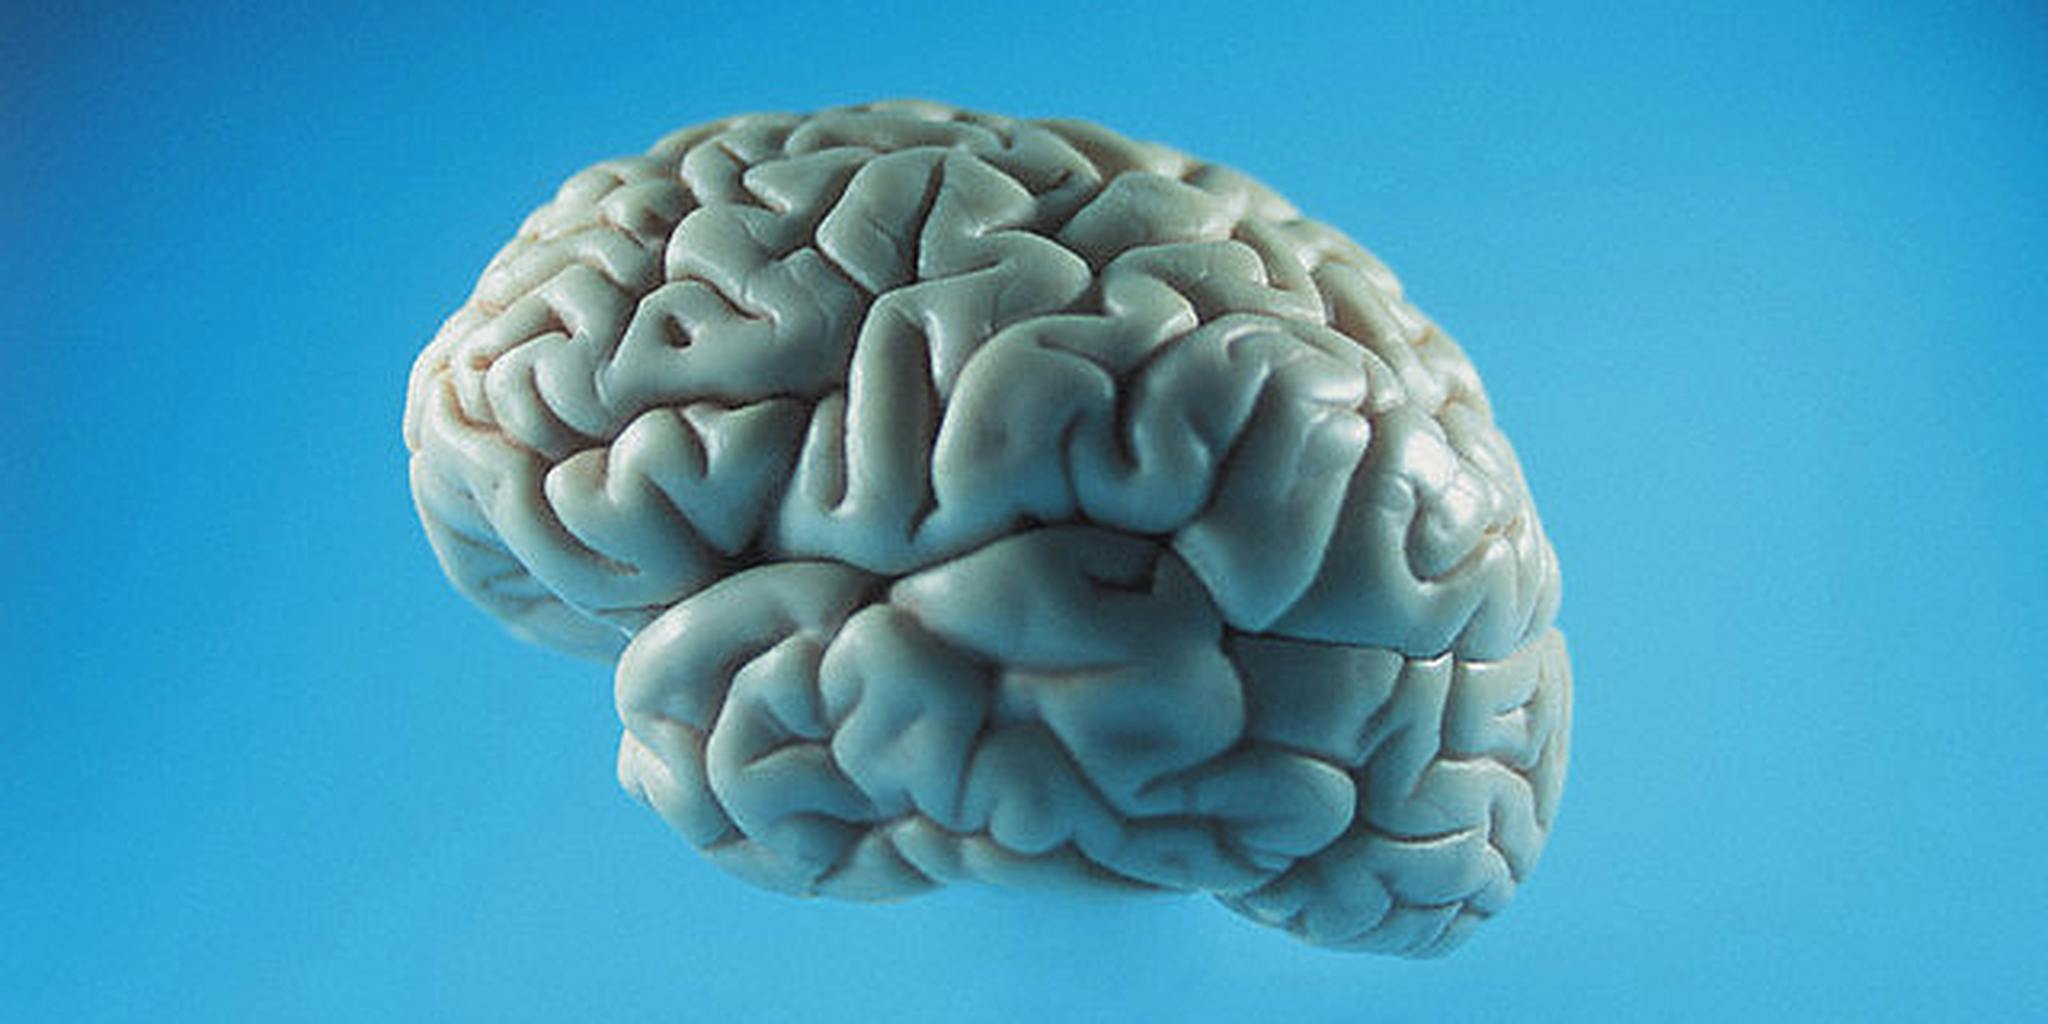 R brain. Цветок похожий на мозг. Мозг похожий на губку. Облака похожие на мозг. Животное похожее на мозг в биологии.